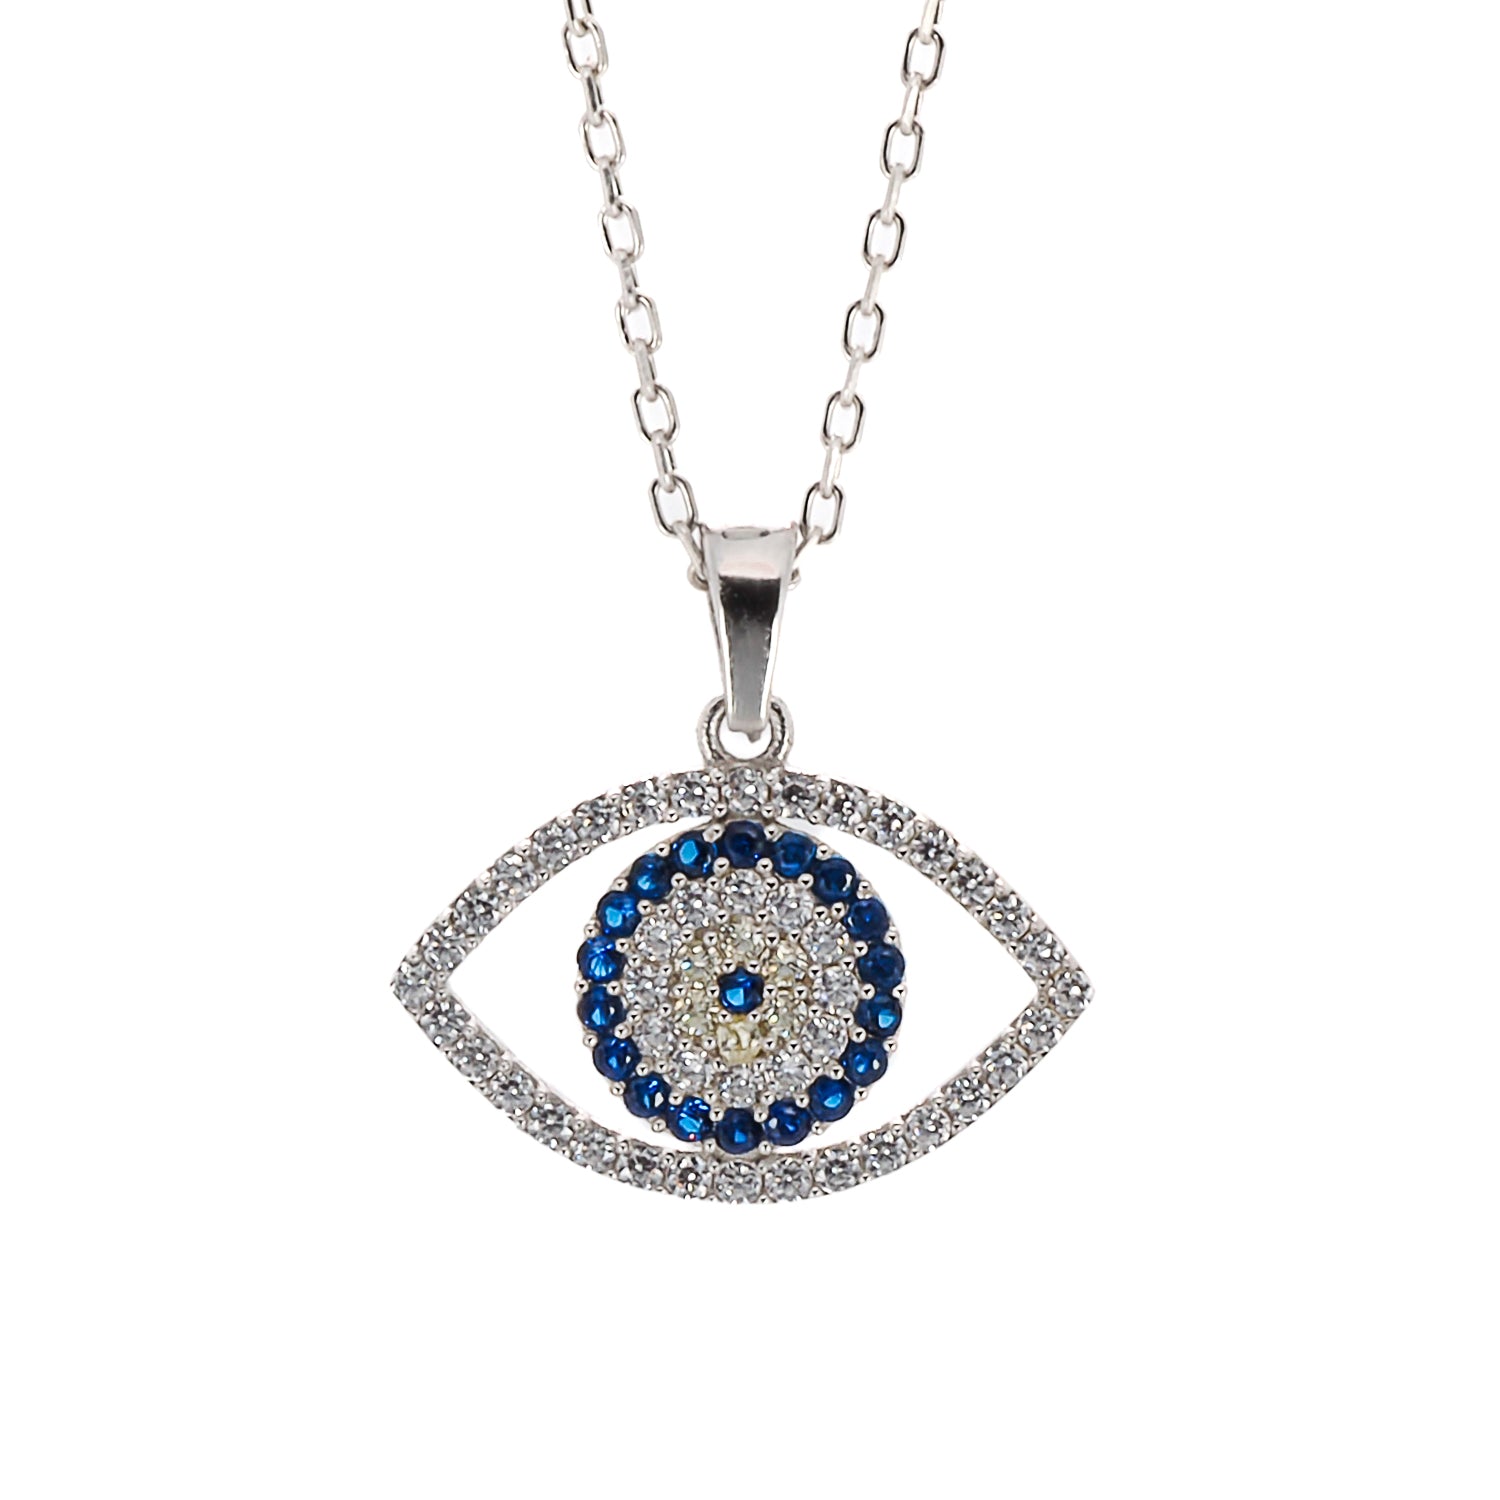 A close-up of the CZ diamond-adorned evil eye pendant on the Sparkly Evil Eye Necklace.